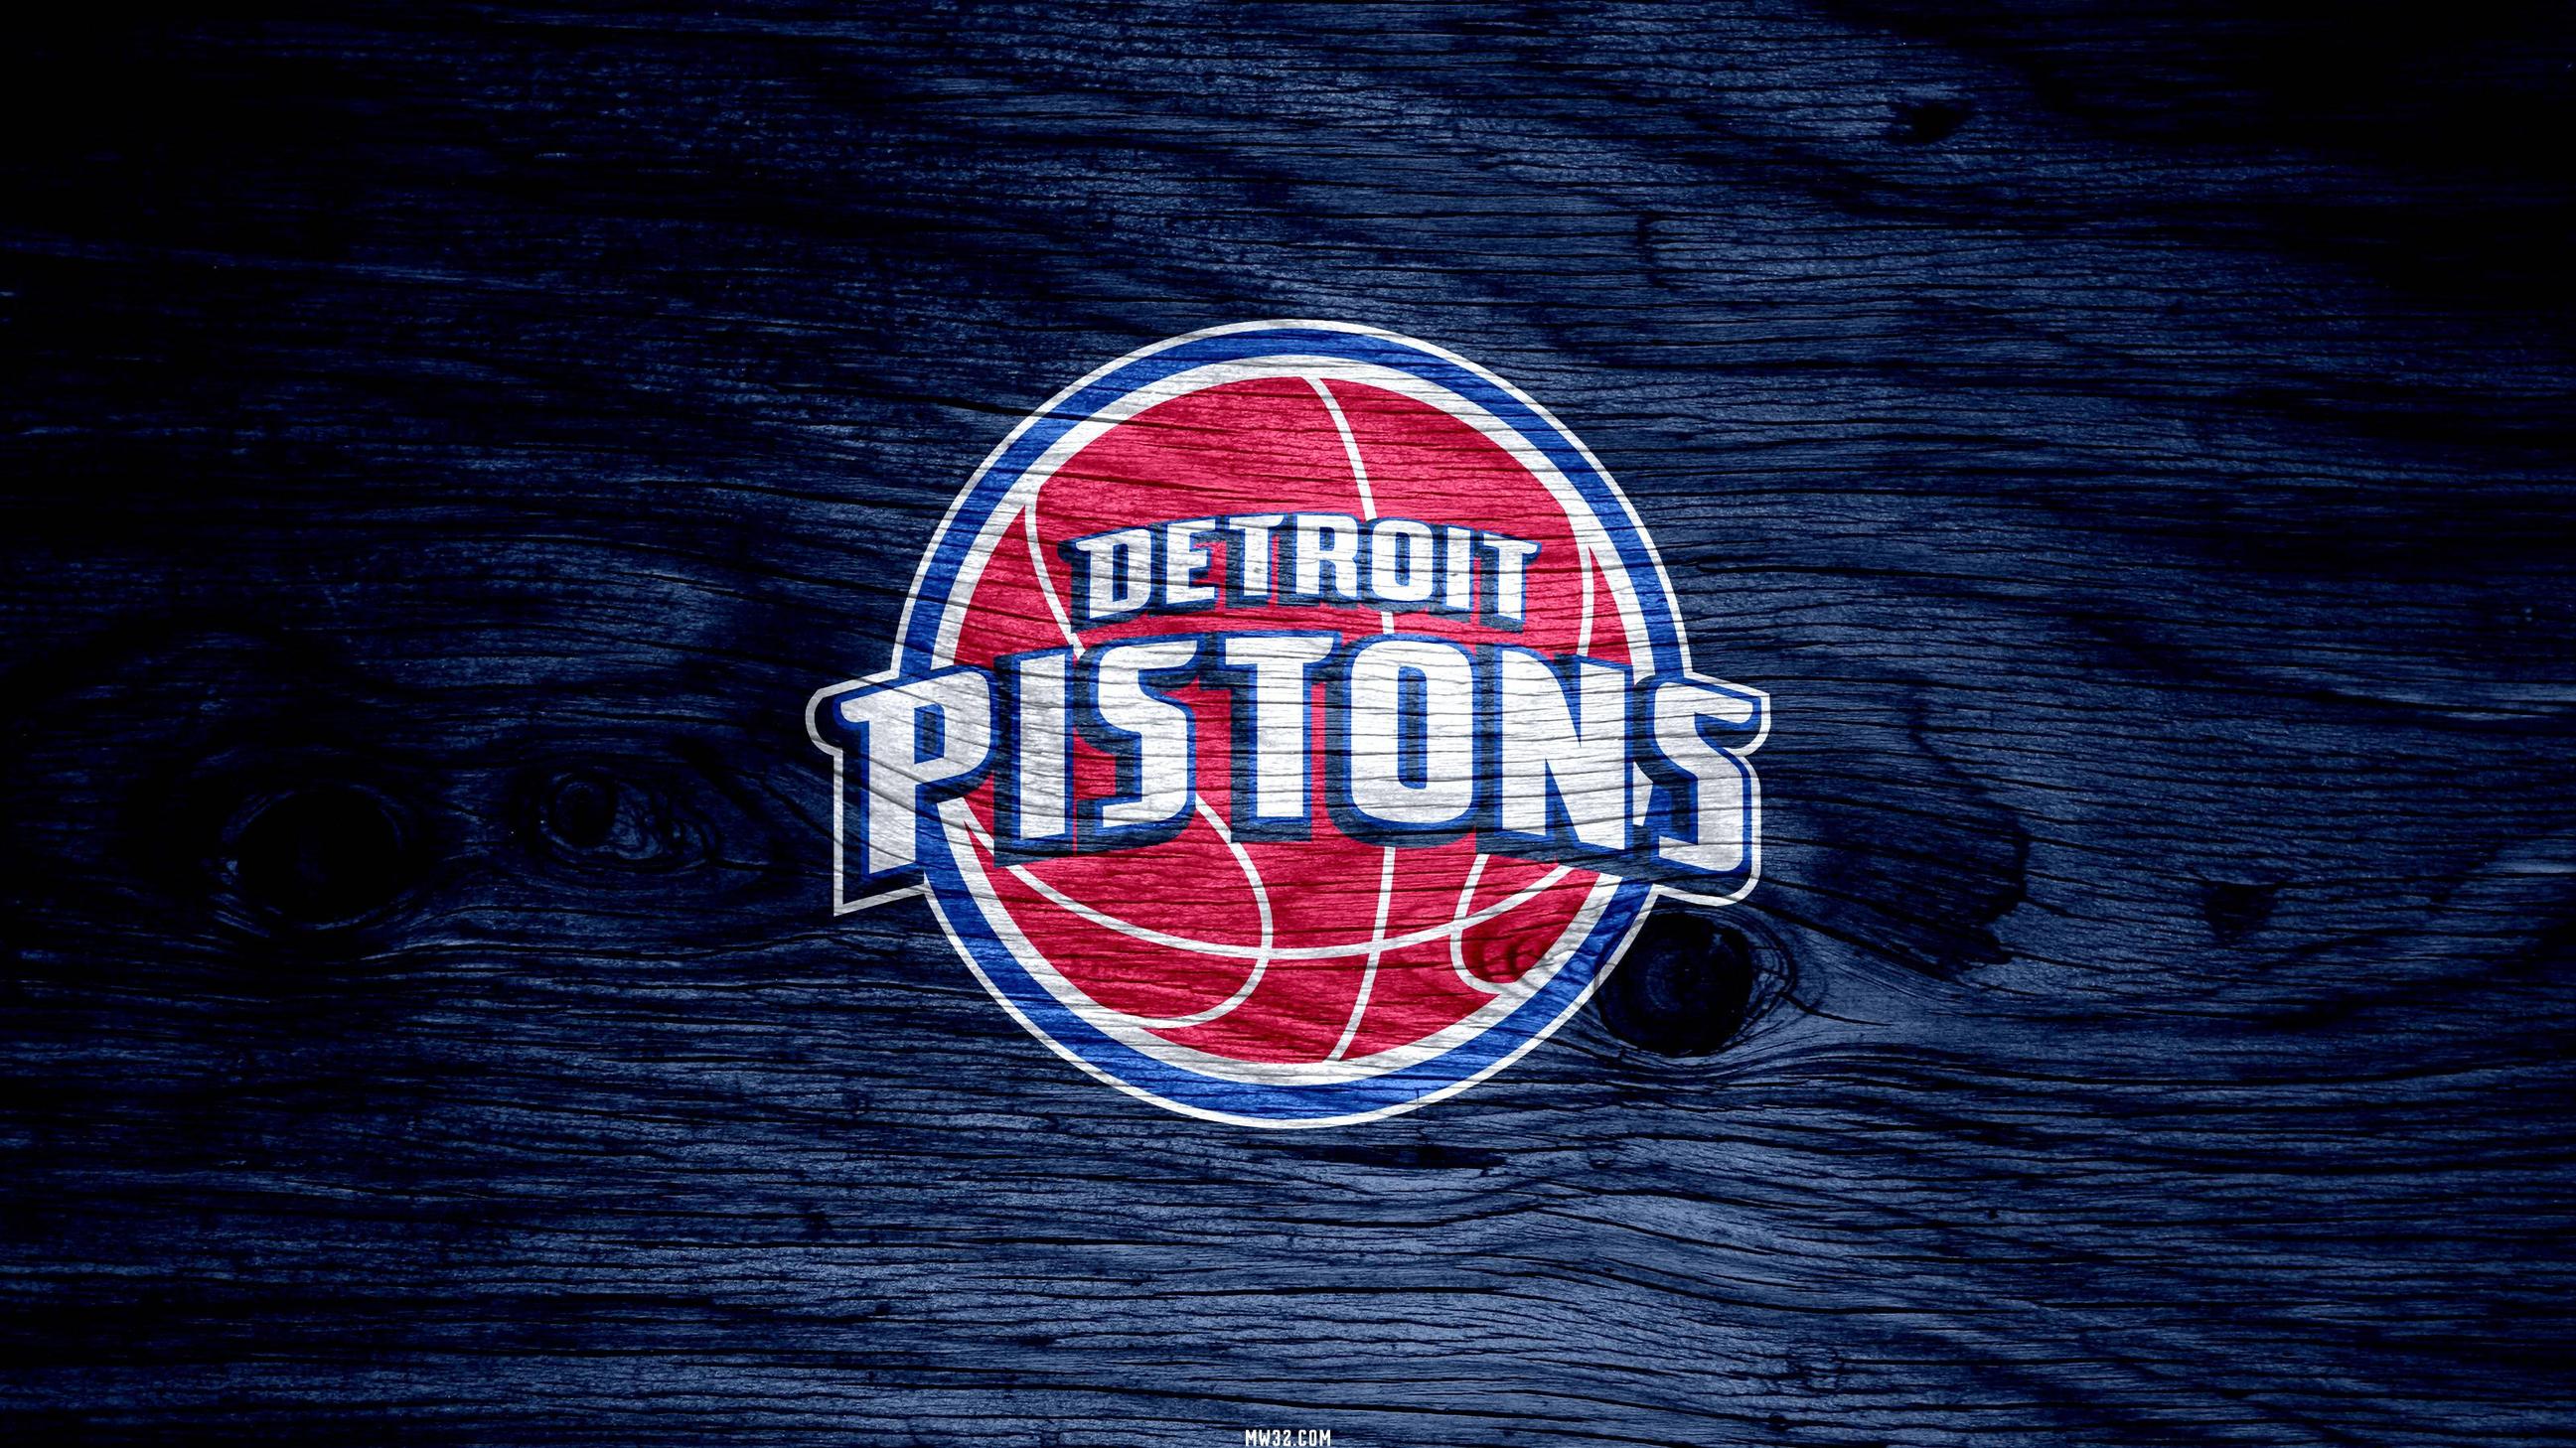 Detroit Pistons HD Wallpaper Background Image Id